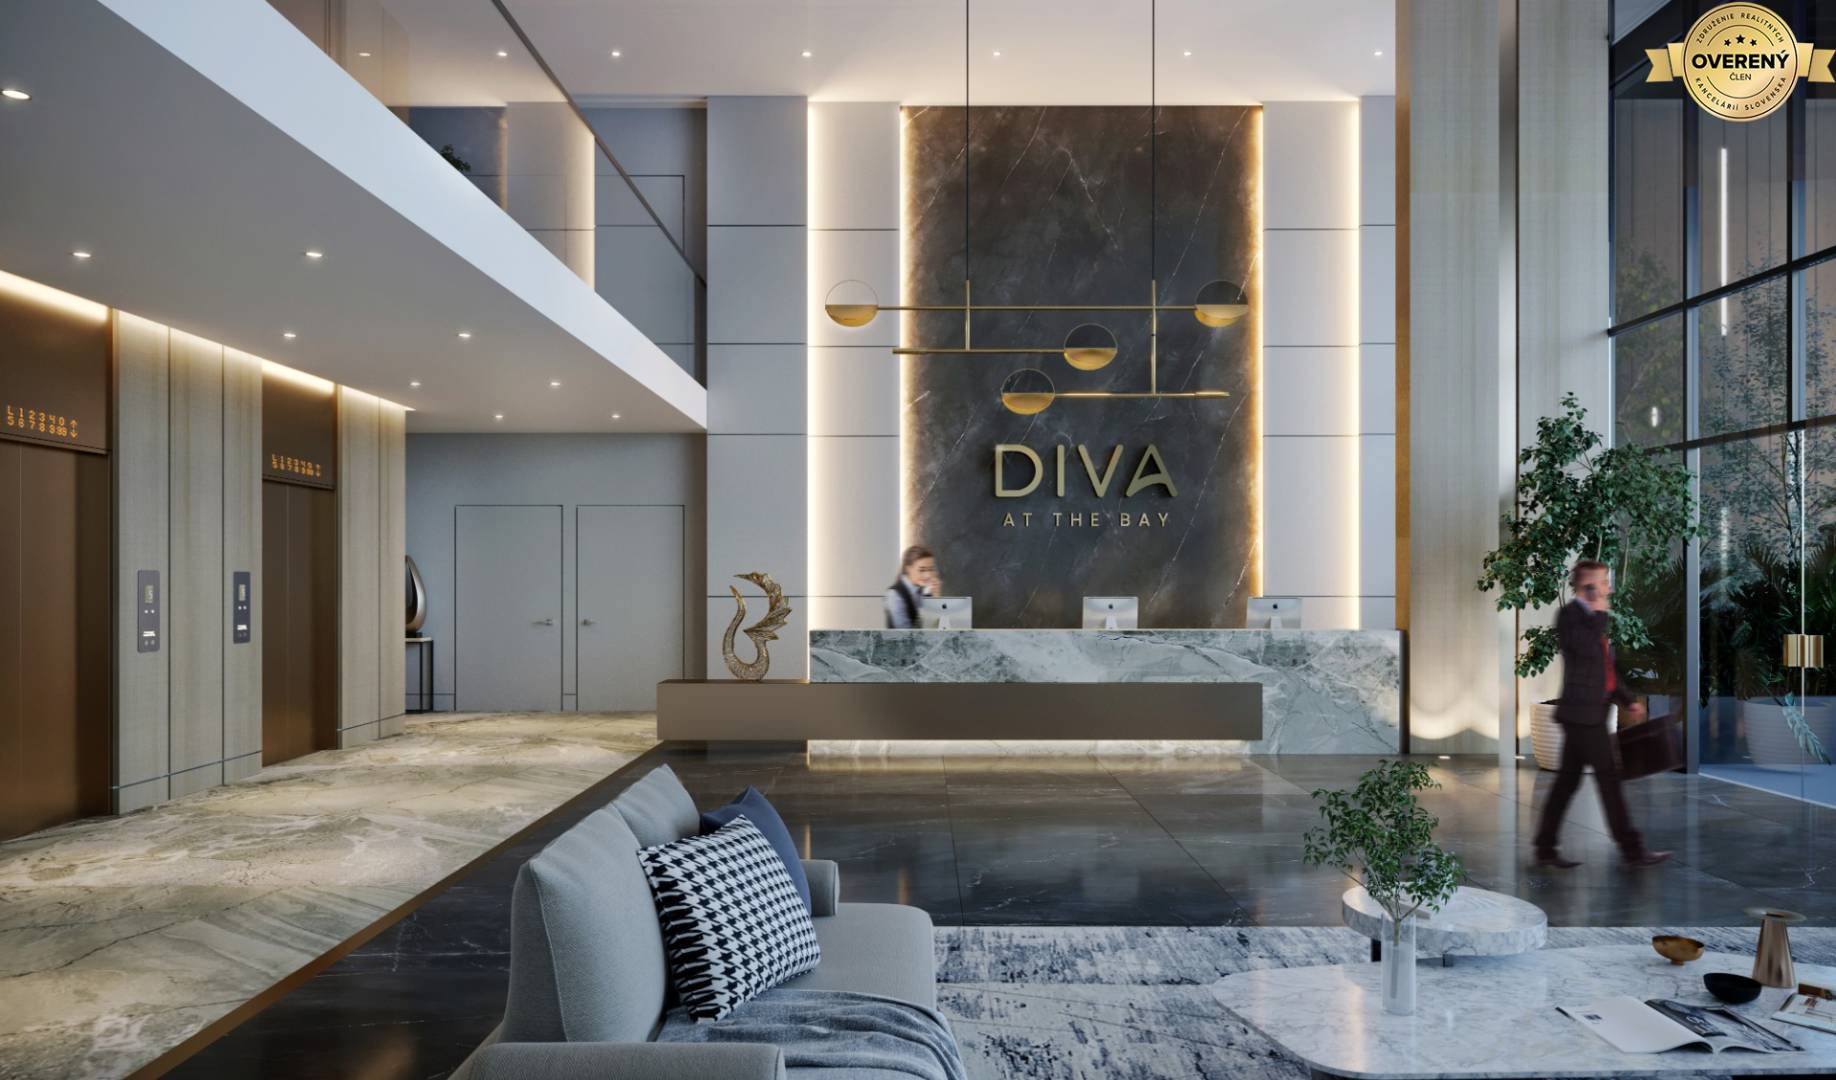 DIVA: ST type B one - room apartman in the Abu Dhabi